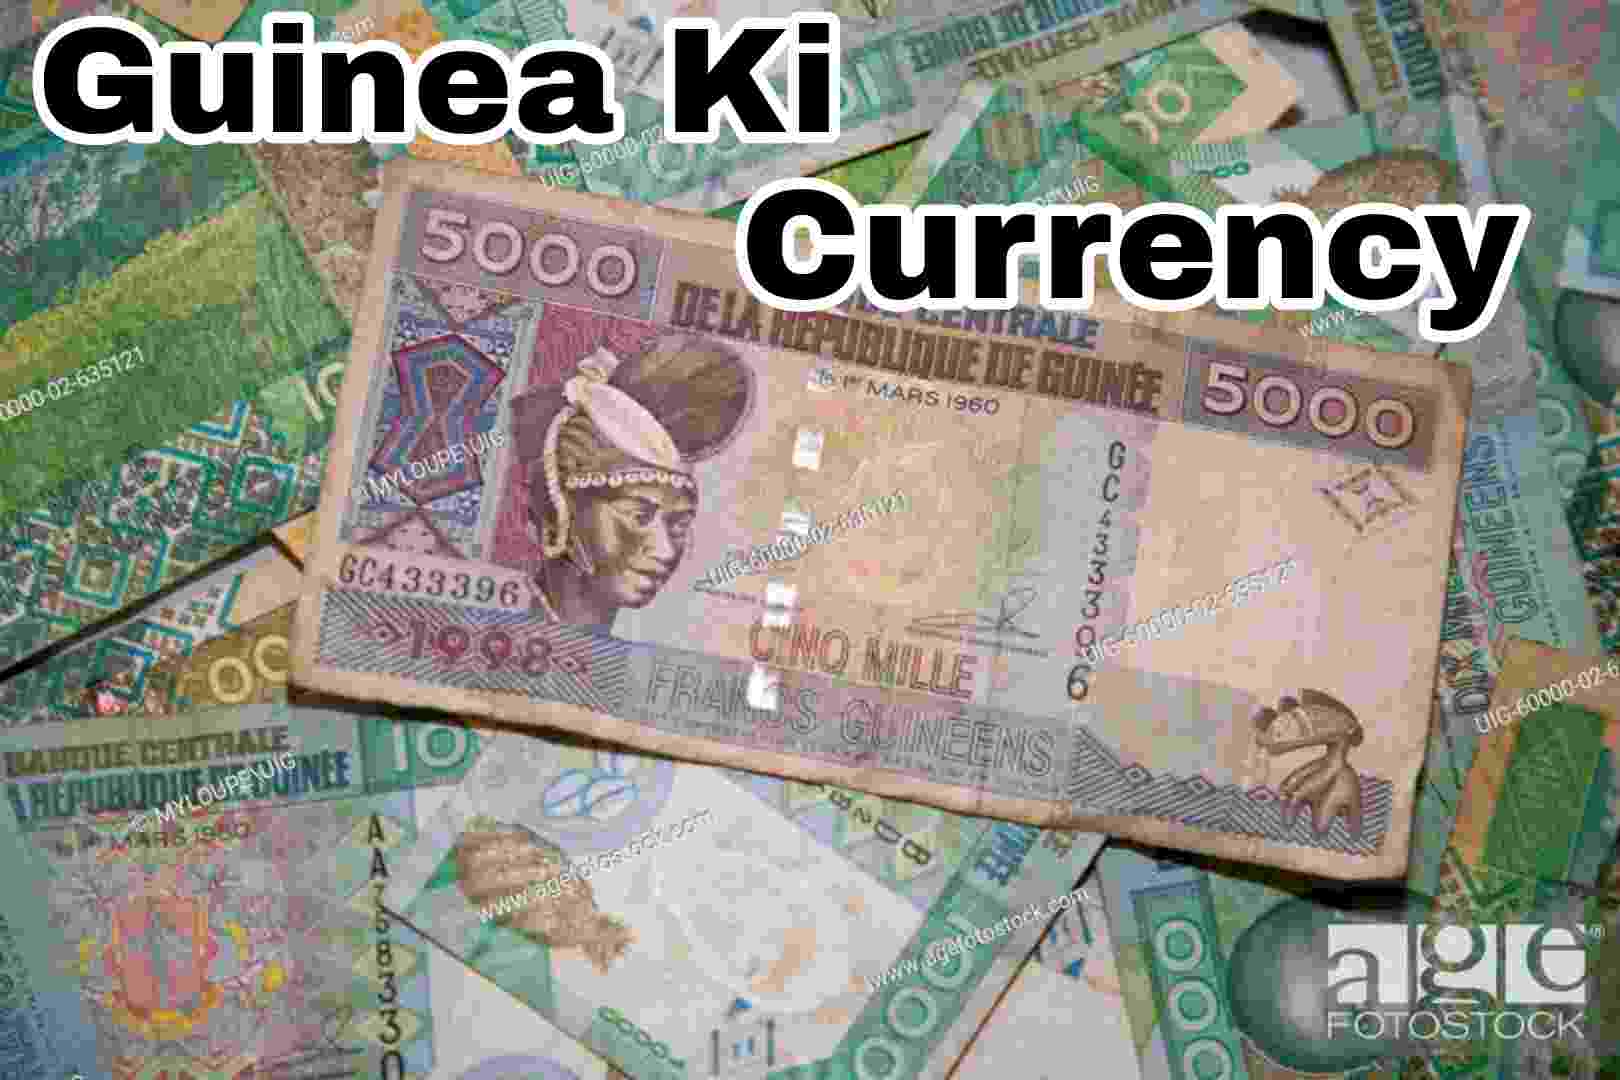 Guinea-ki-currency